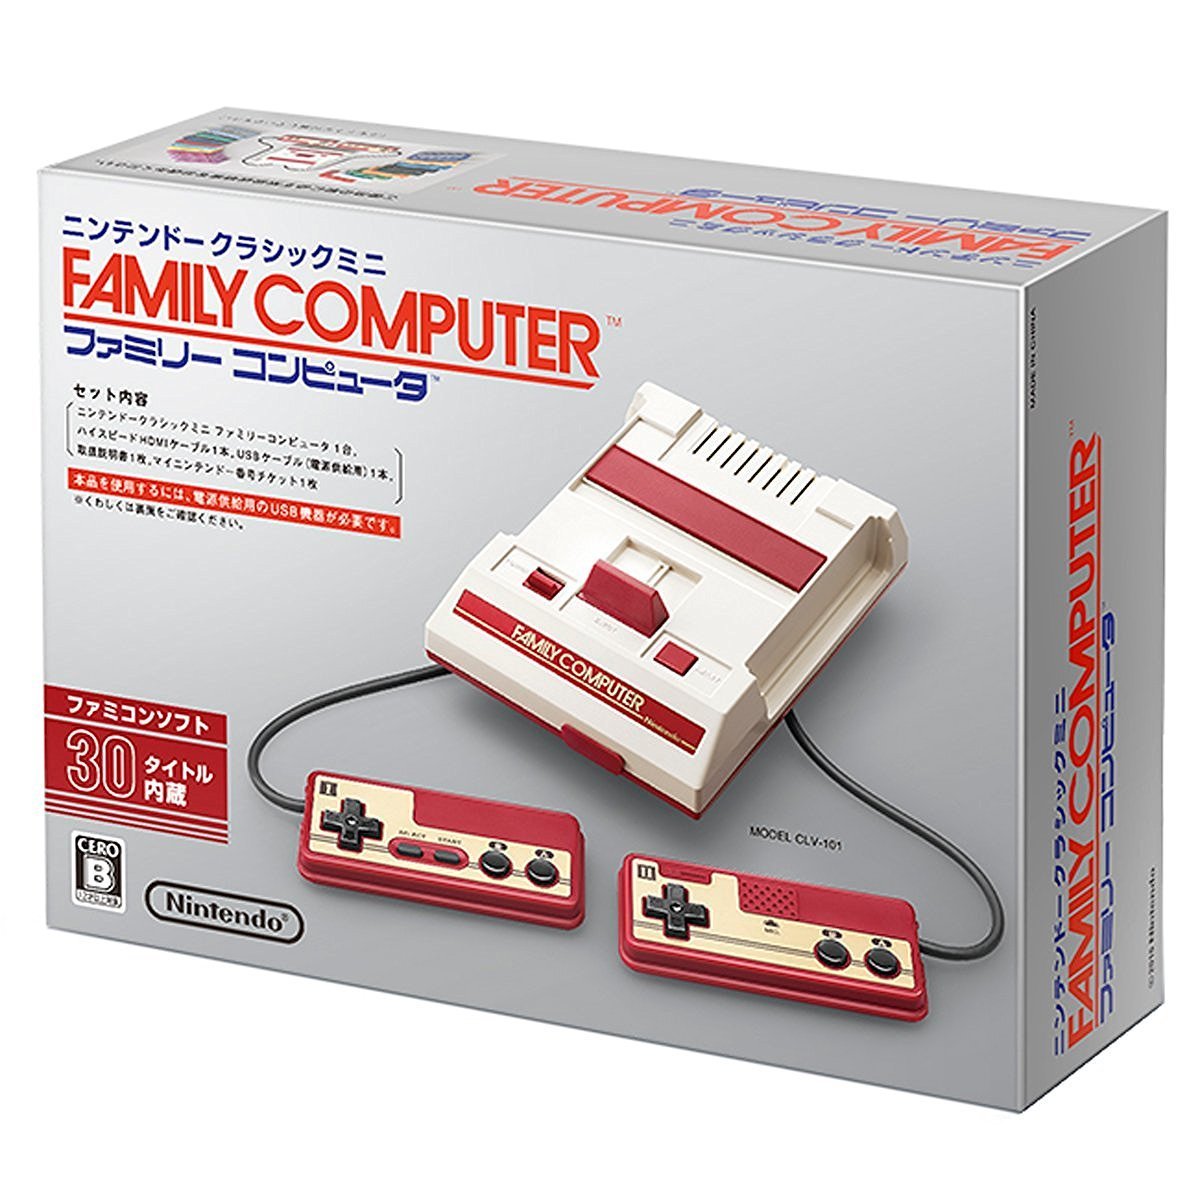 Family Computer Consola